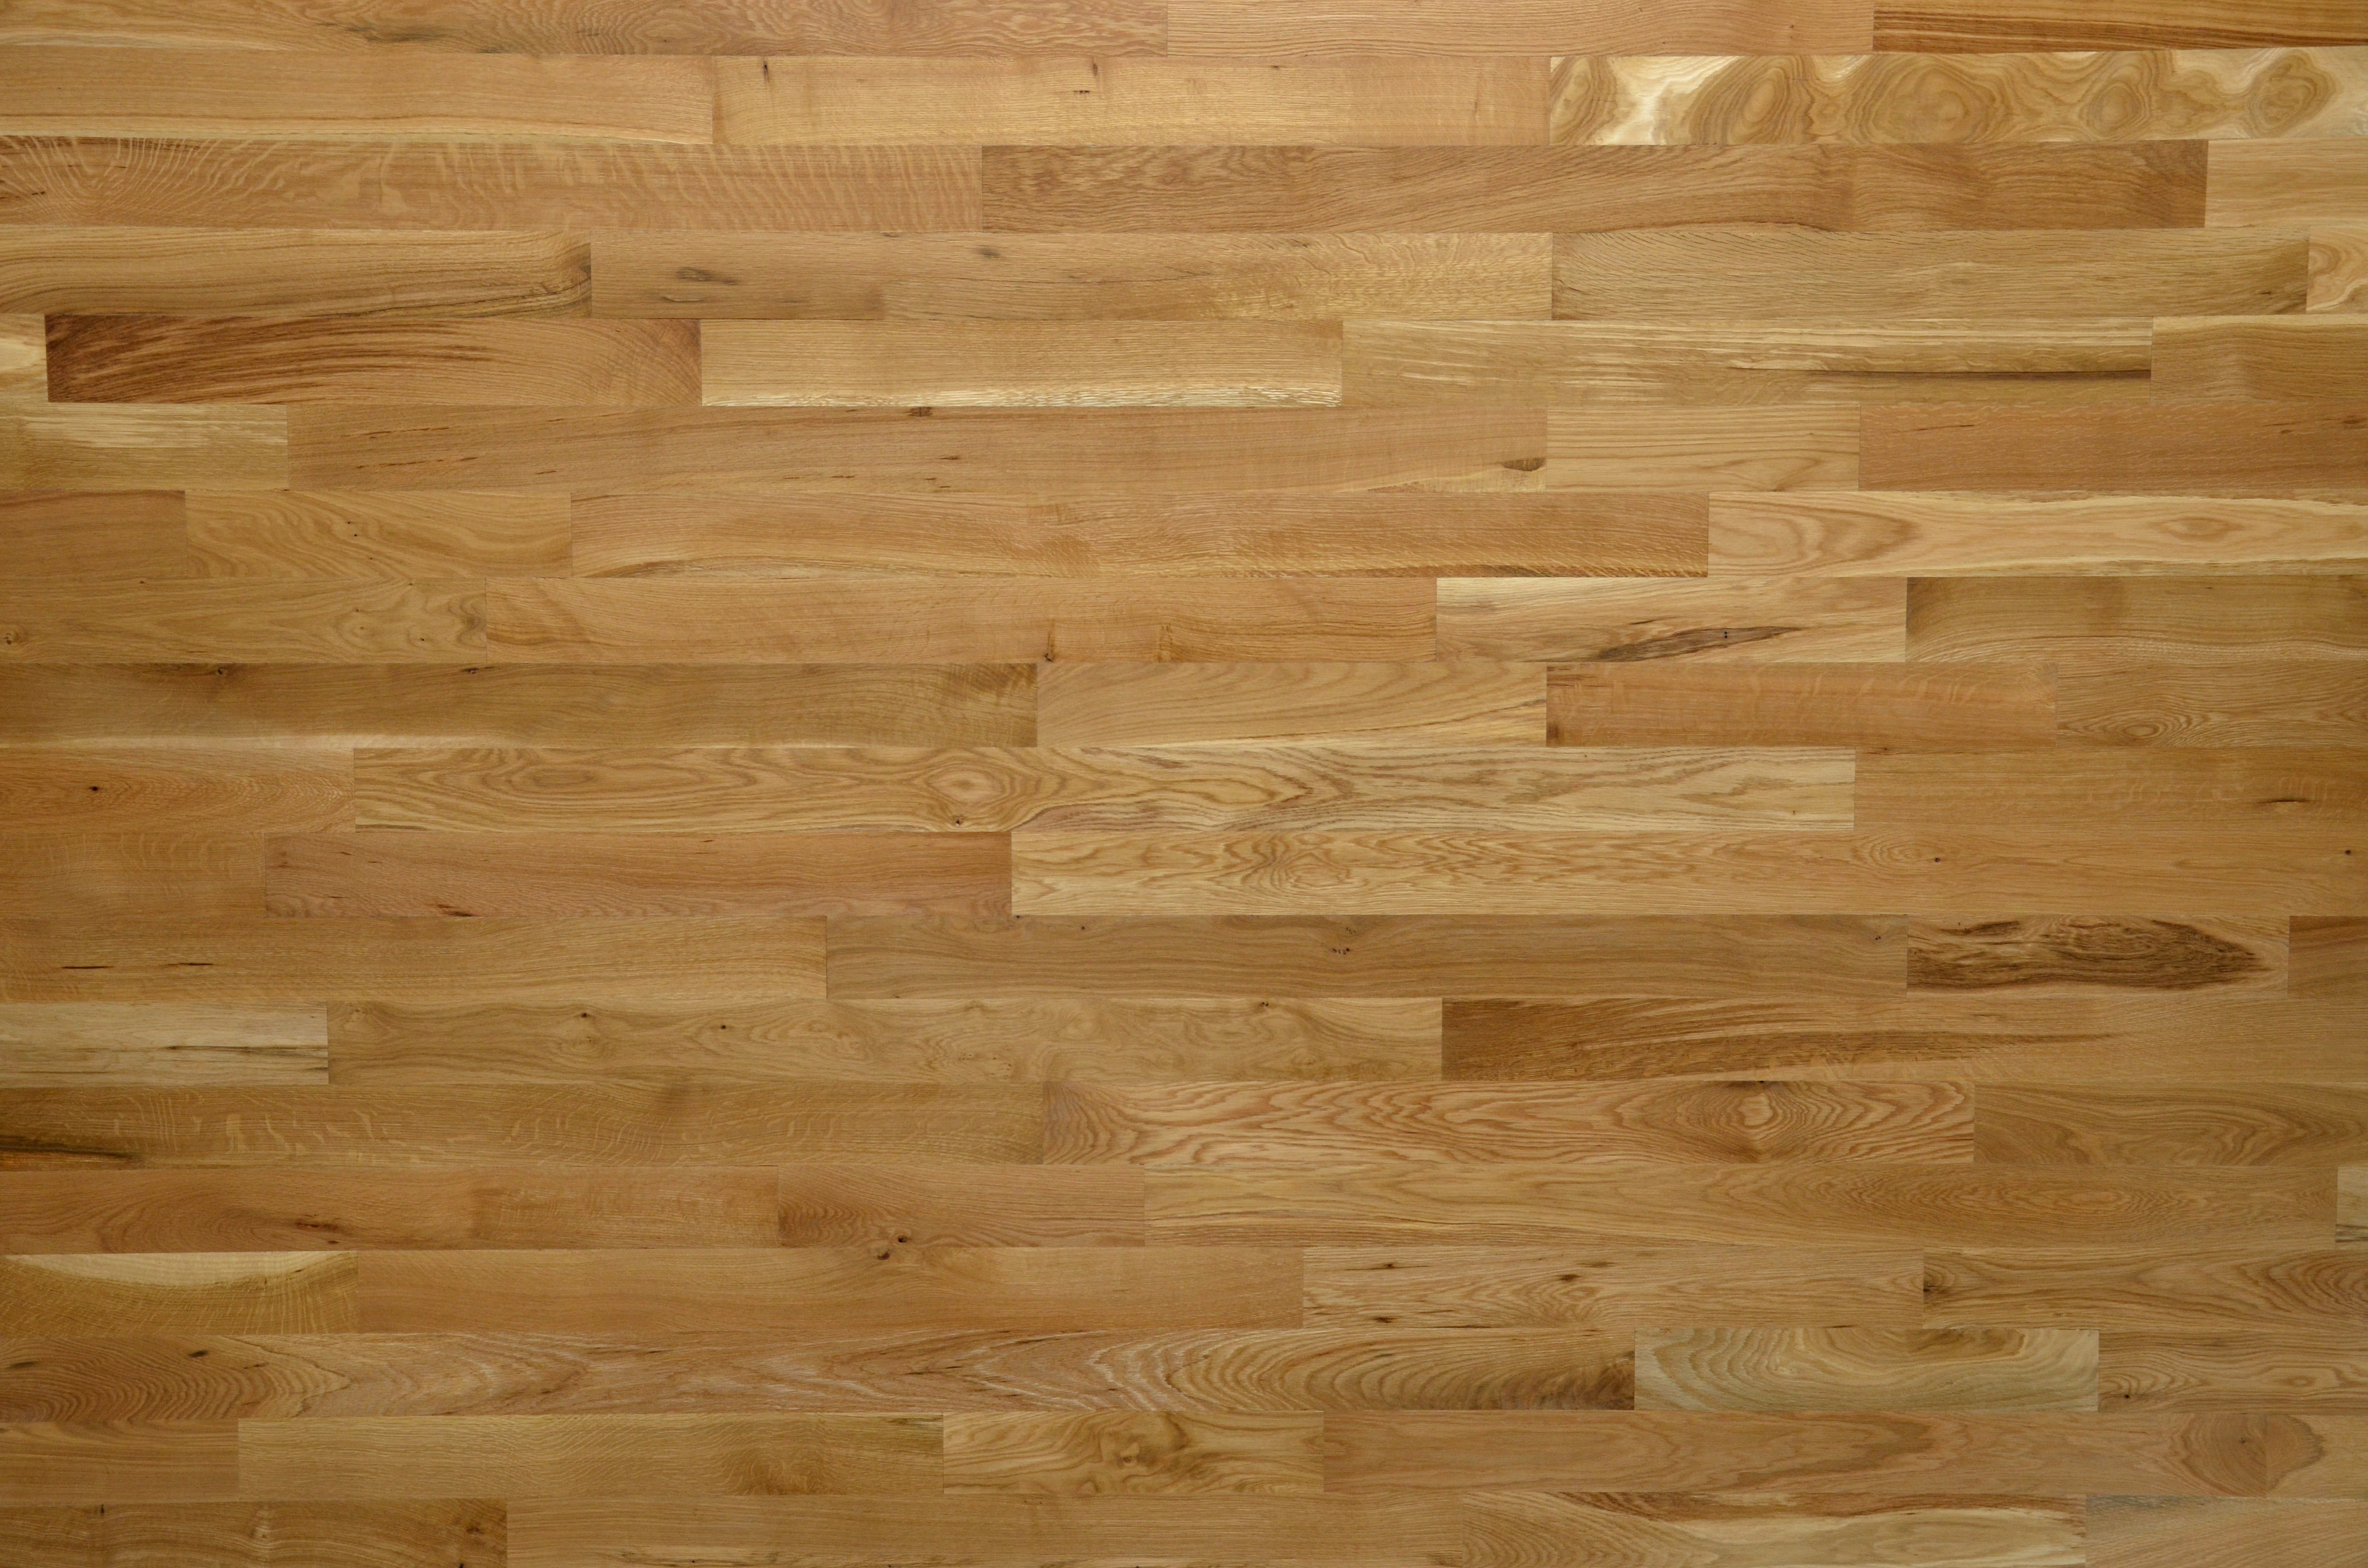 22 attractive Most Popular Engineered Hardwood Flooring Color 2022 free download most popular engineered hardwood flooring color of lacrosse hardwood flooring walnut white oak red oak hickory in 1 common white oak